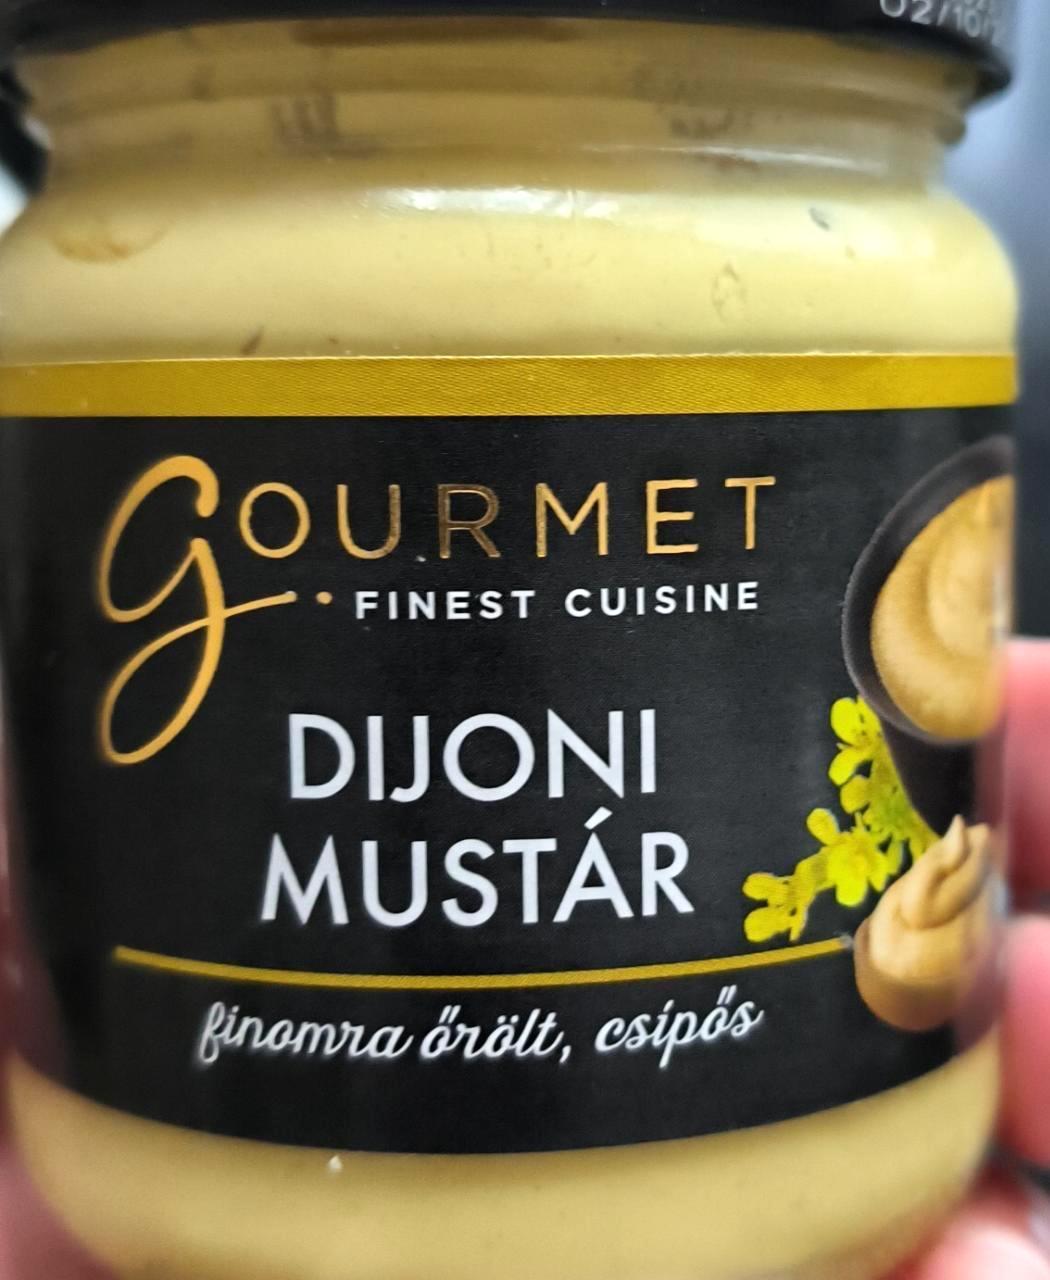 Képek - Dijoni mustár Gourmet